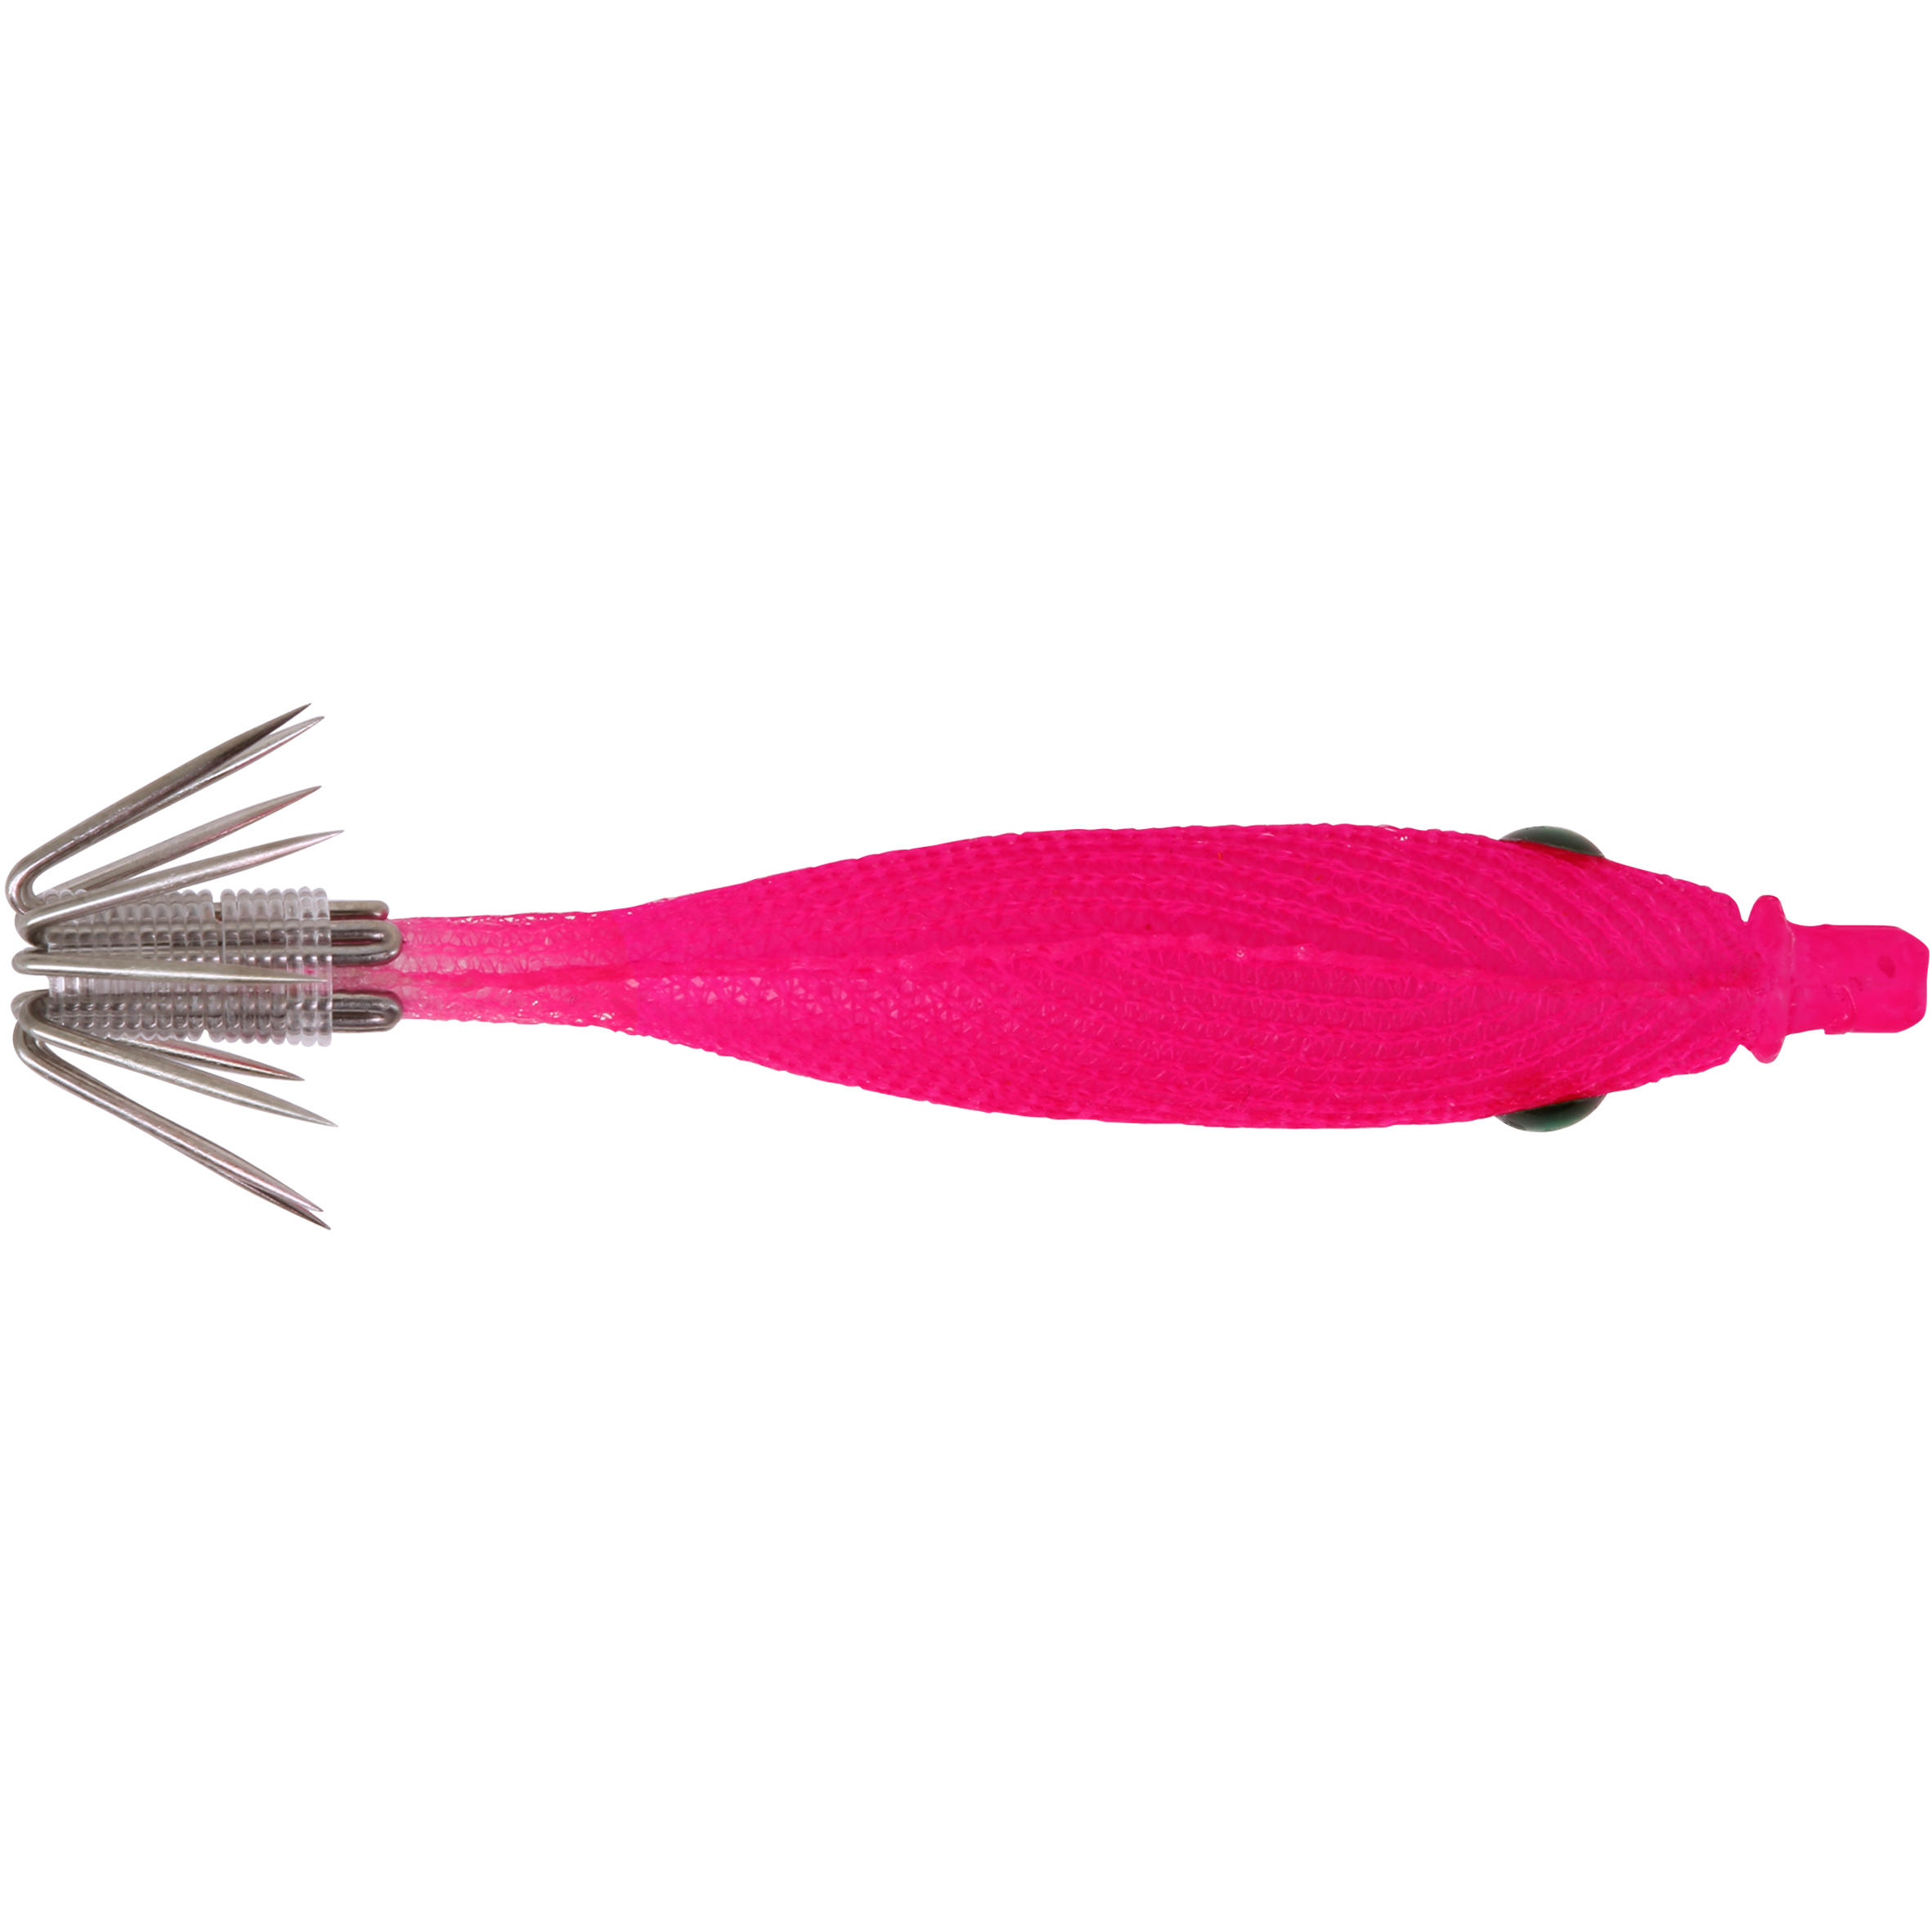 EBIKA soft 1.8 50 pink cuttlefish/squid fishing jig 4/10